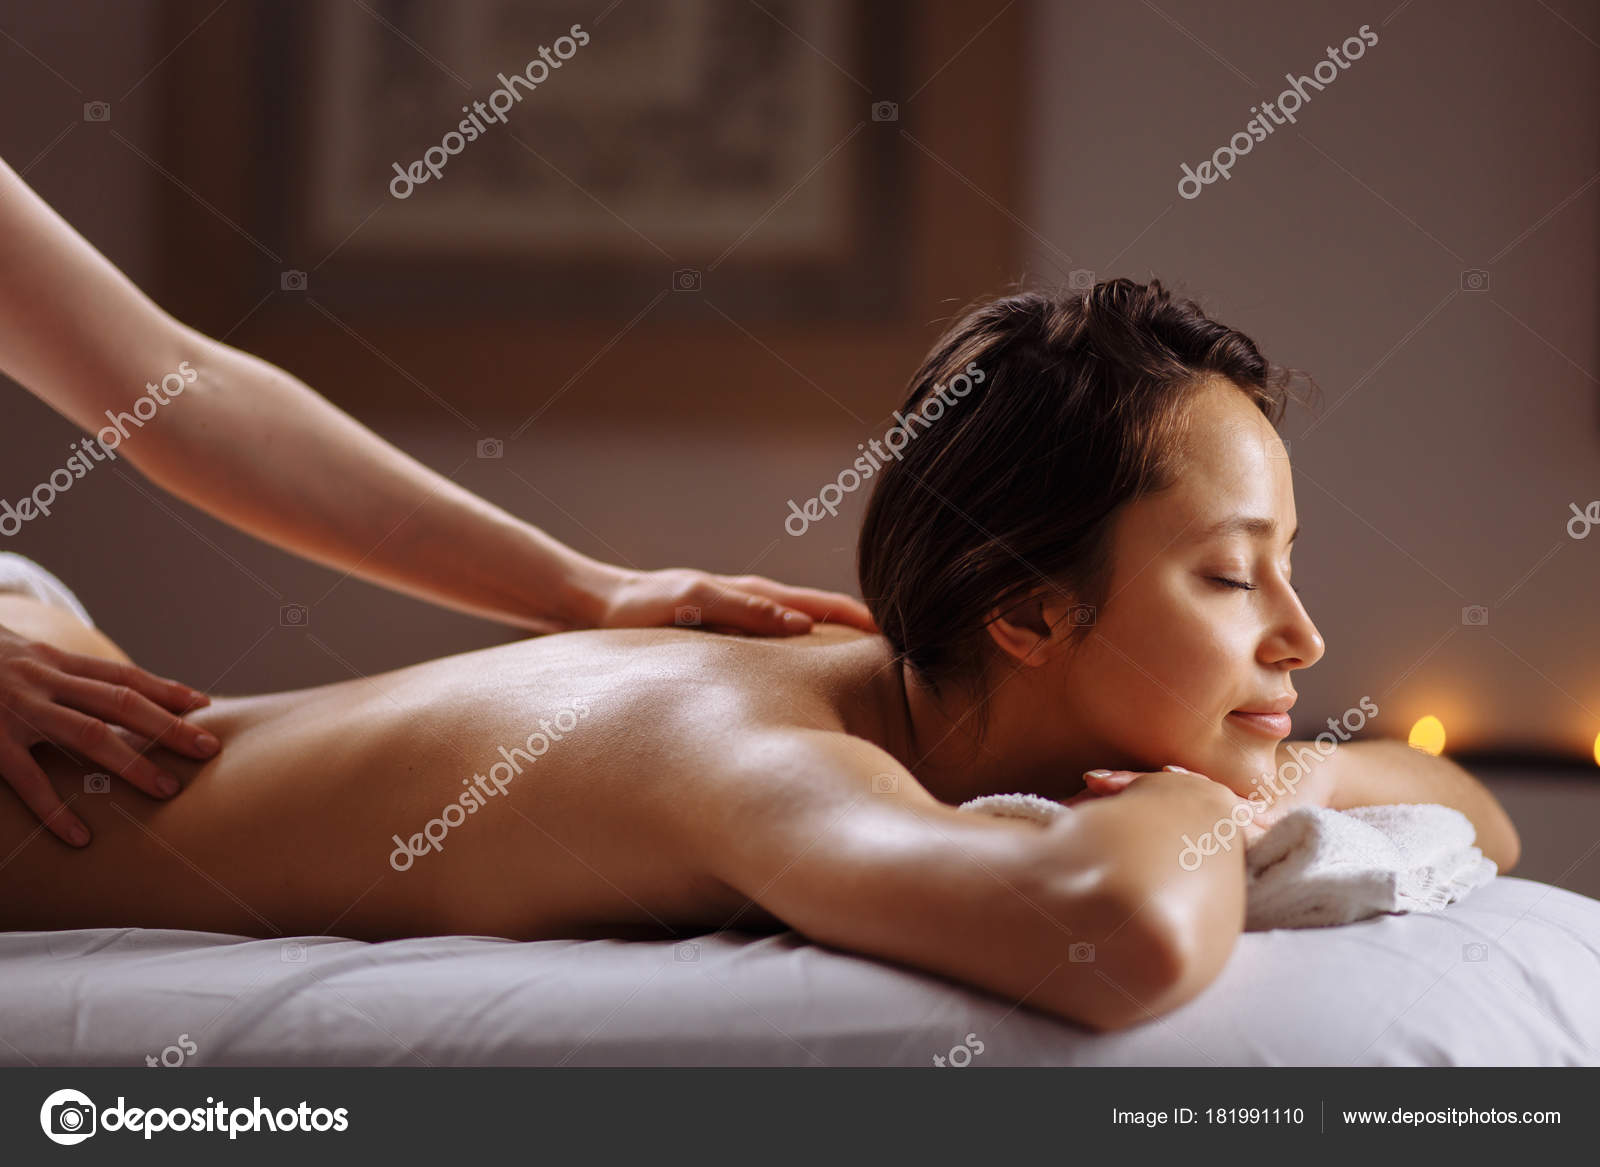 https://st3.depositphotos.com/13768208/18199/i/1600/depositphotos_181991110-stock-photo-beautiful-woman-receiving-a-relaxing.jpg